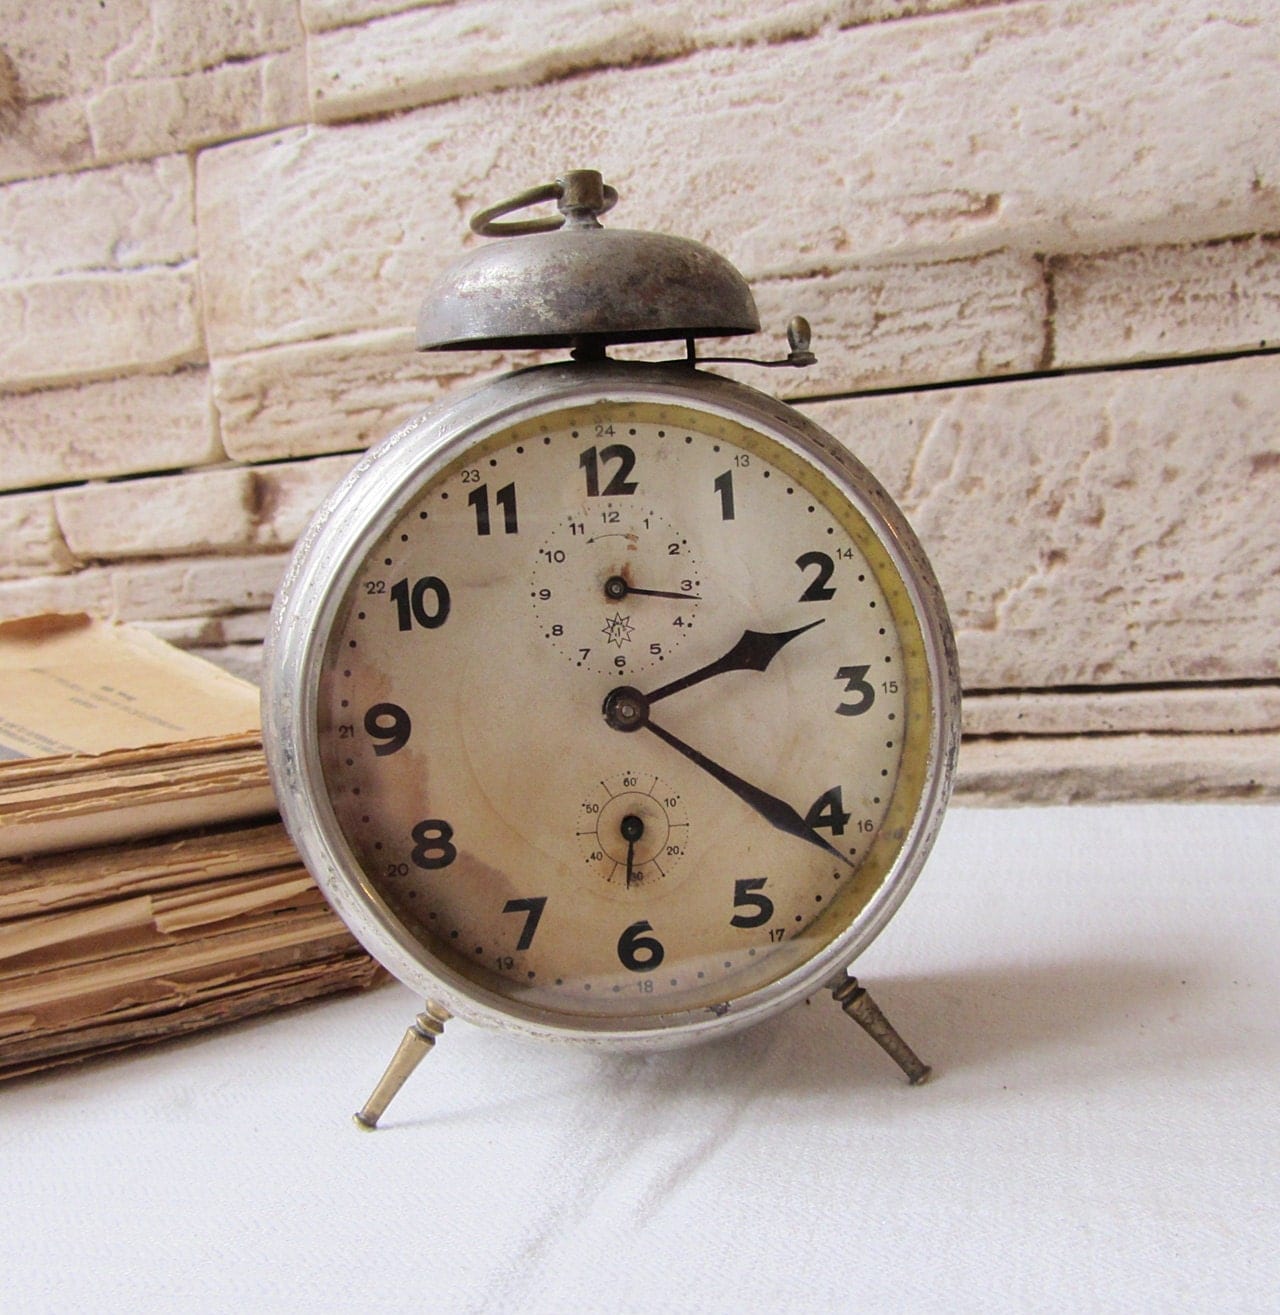 Antique German alarm clock Junghans Vintage alarm by TedDiscovery